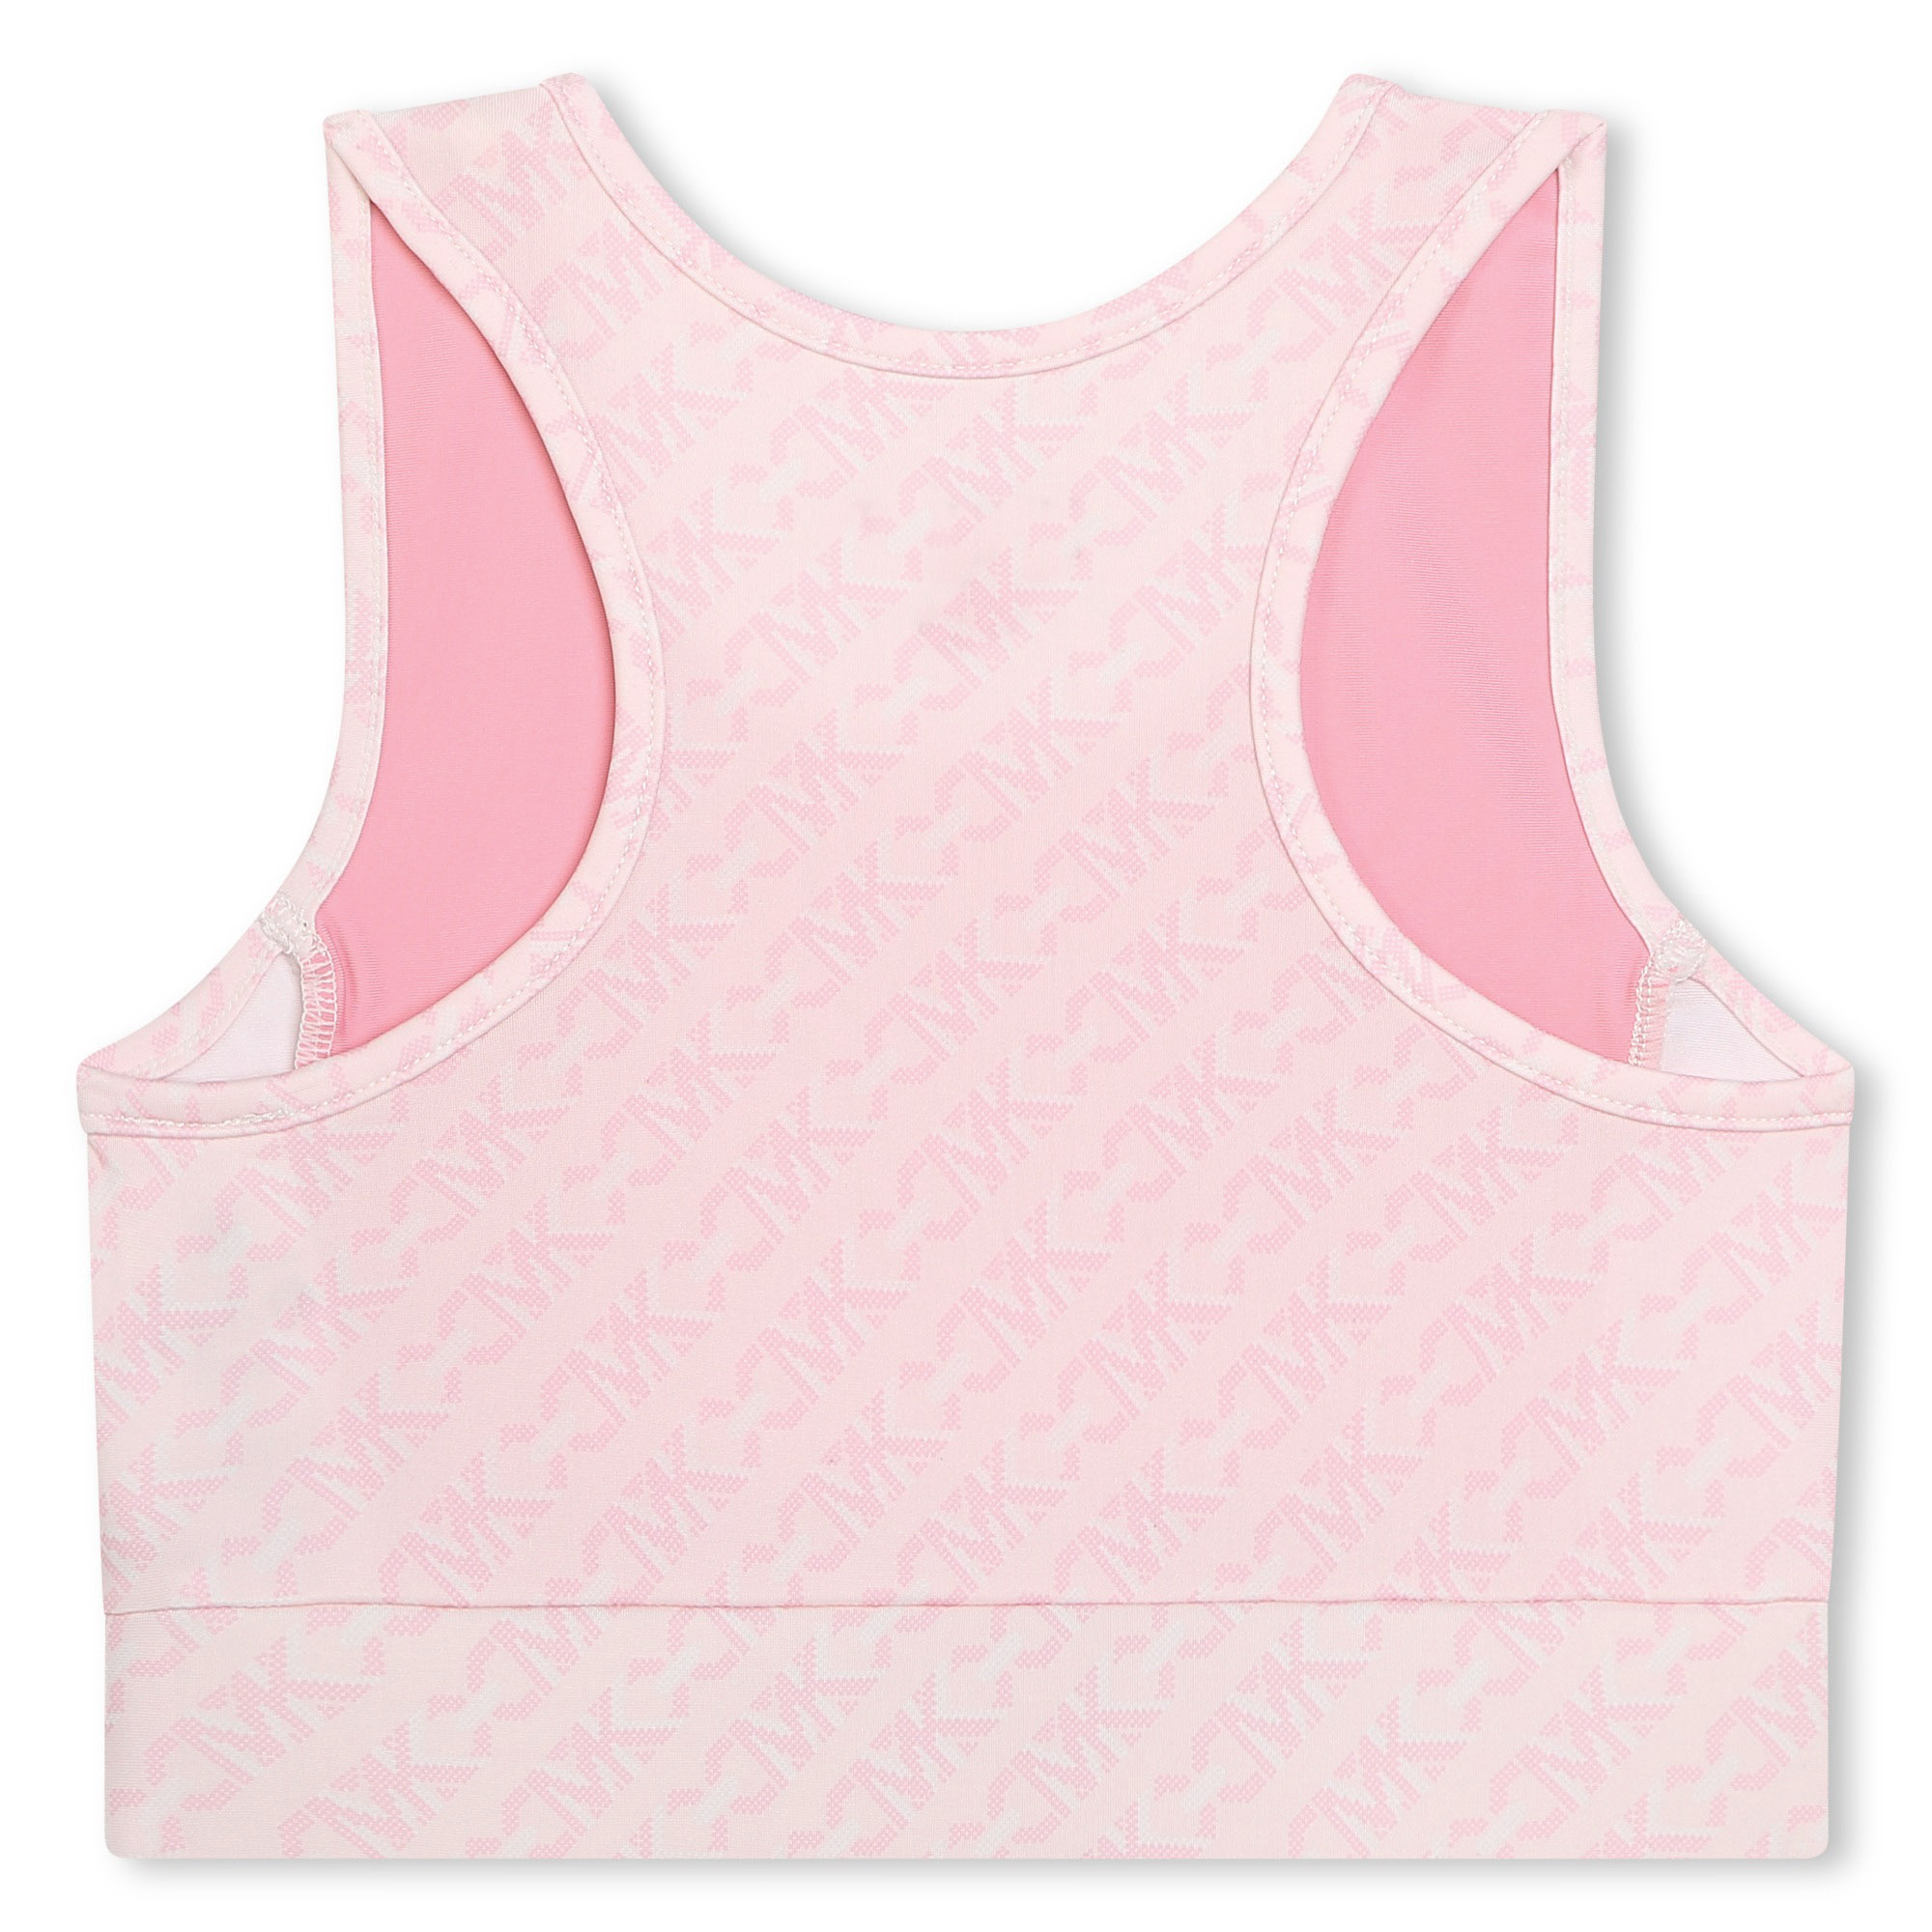 Sports bra with logo MICHAEL KORS for GIRL